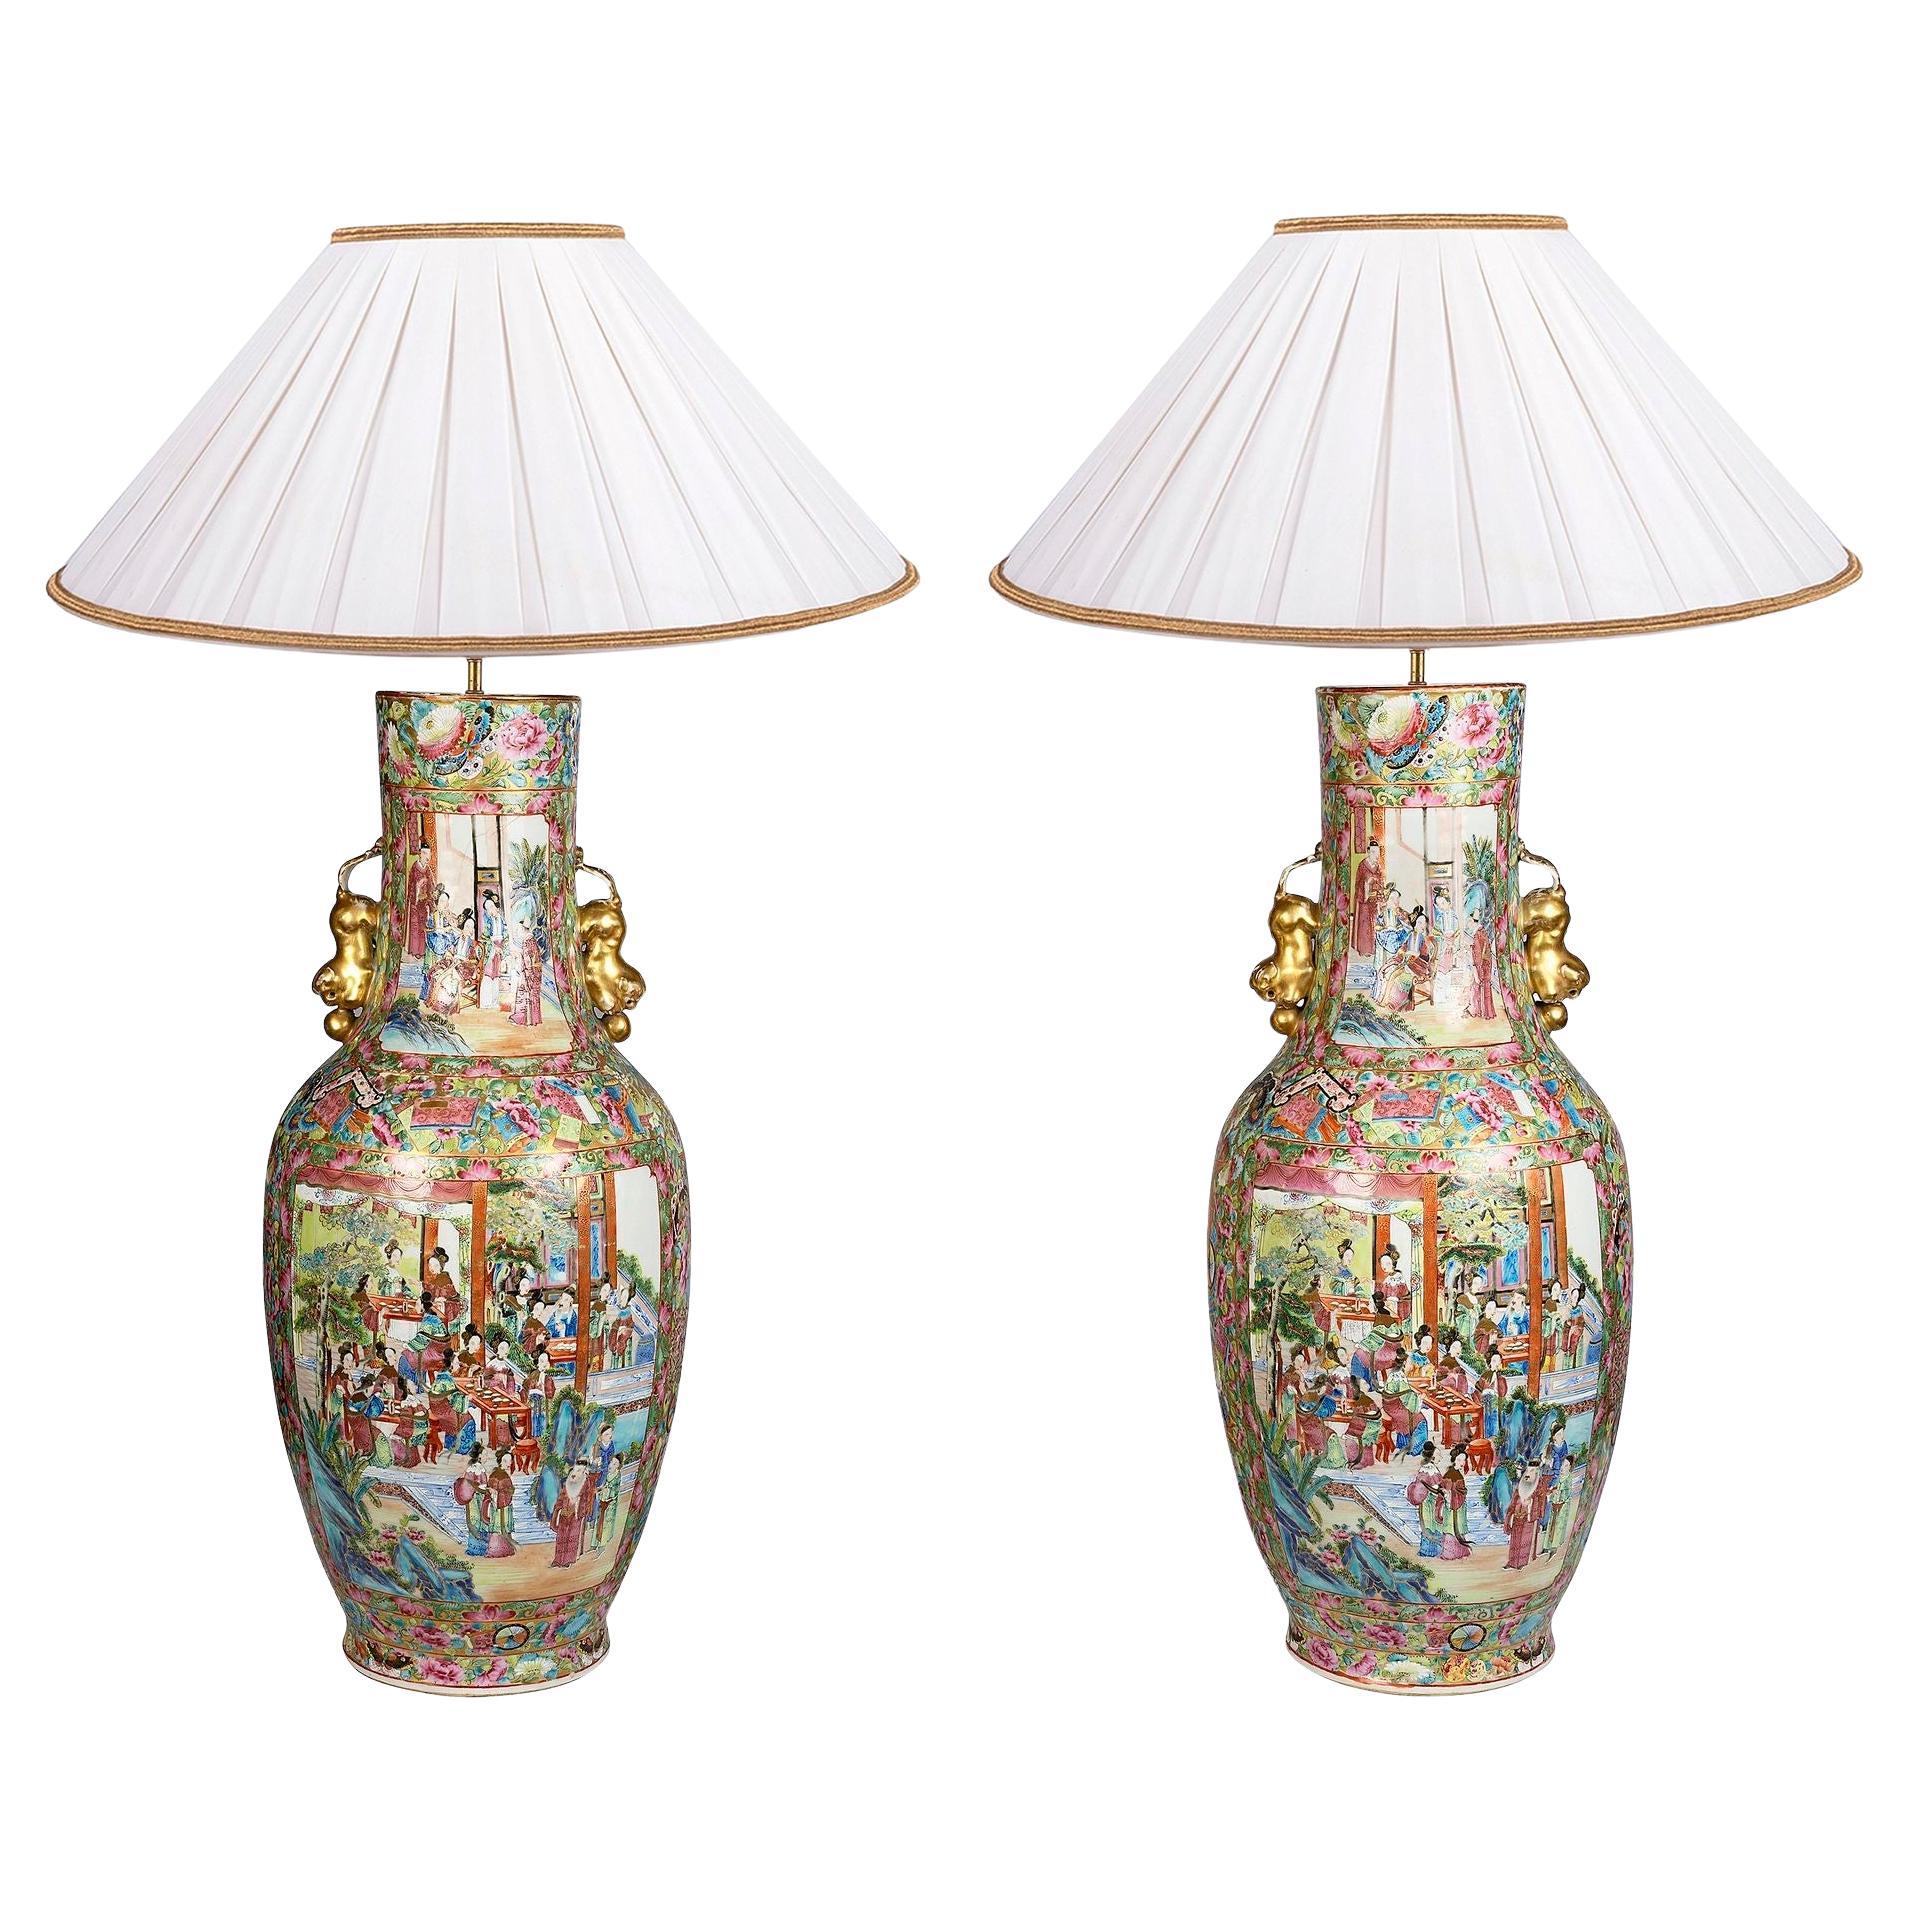 Pair Rose Medallion vases / lamps, 19th Century.